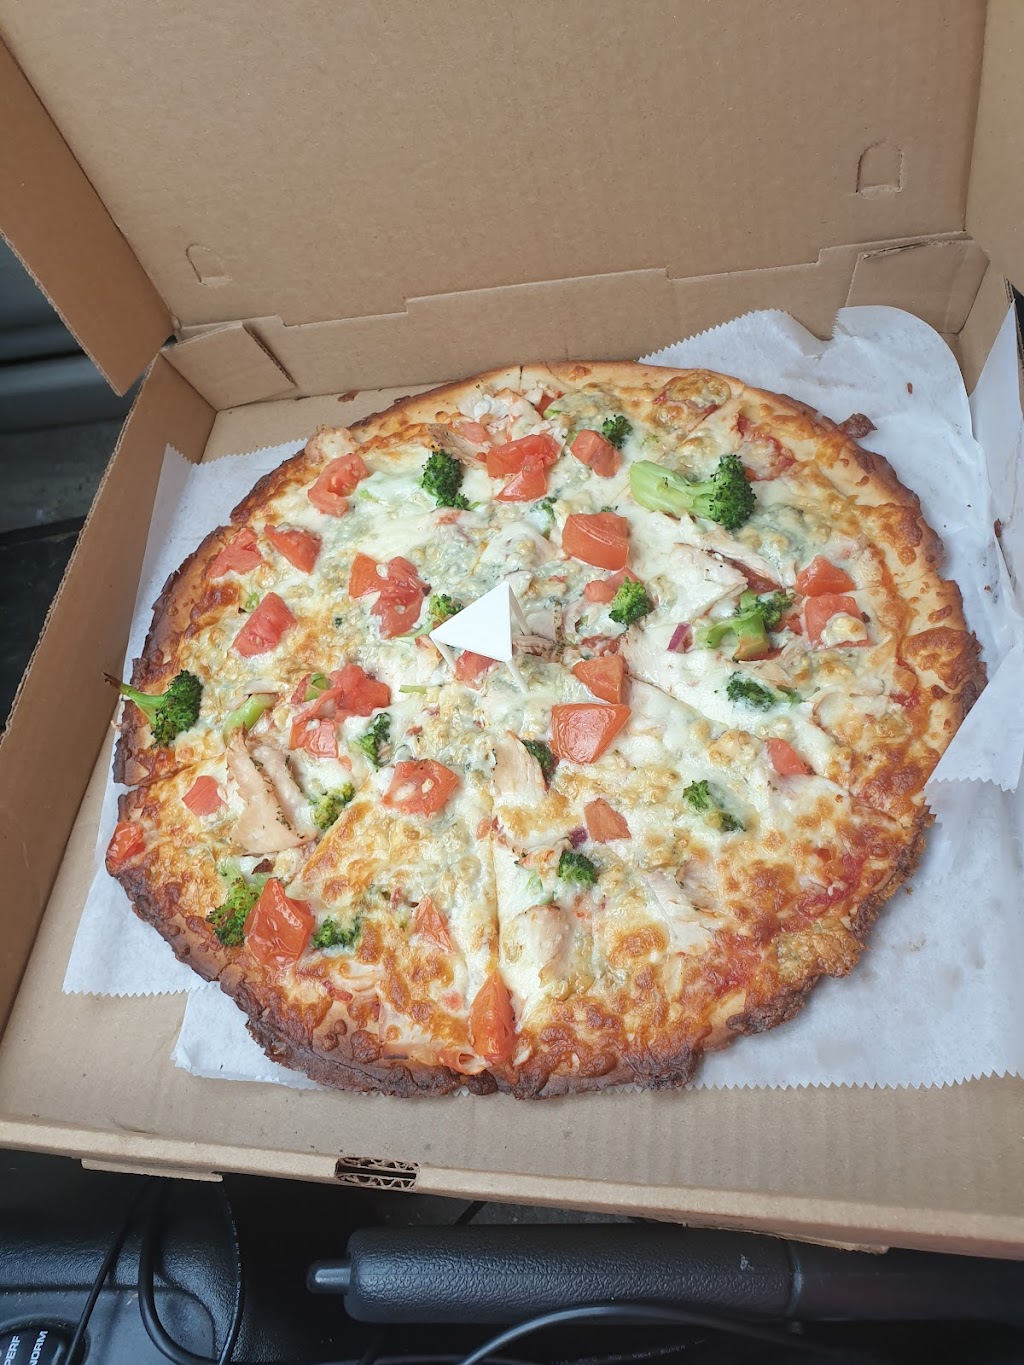 Dannys Pizza | 535 Hazard Ave, Enfield, CT 06082 | Phone: (860) 763-5511